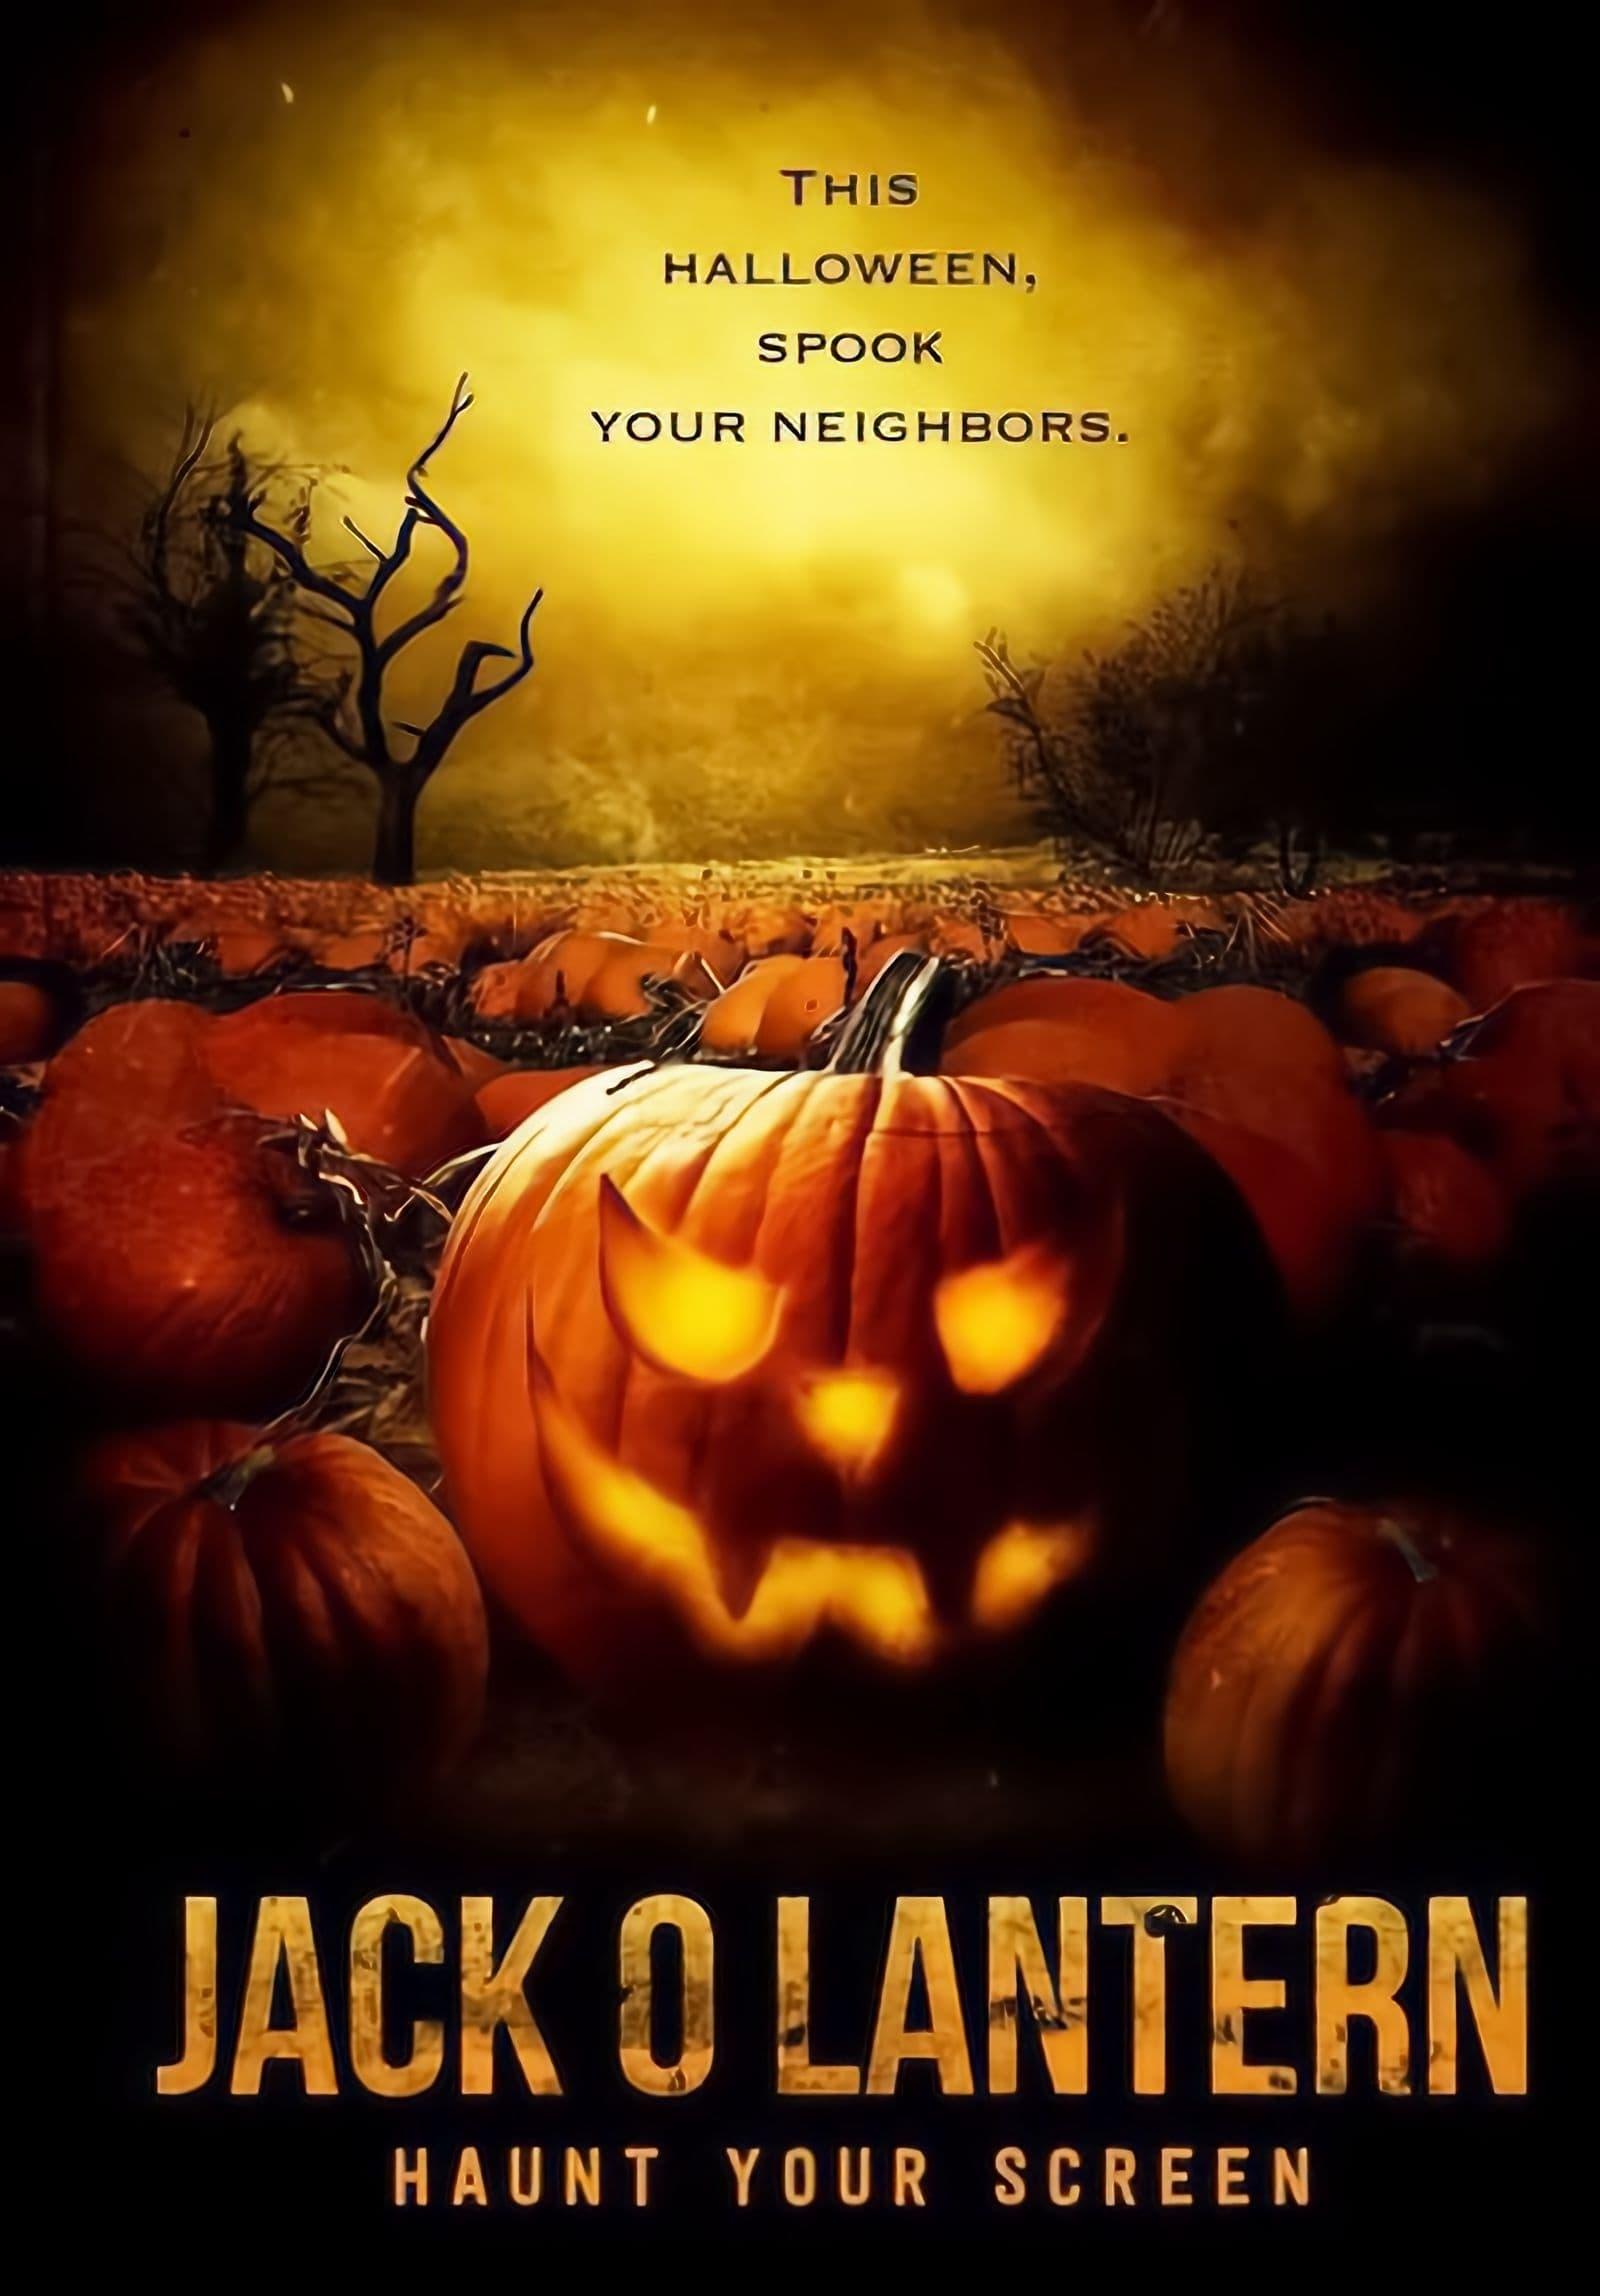 Halloween Jack O'Lantern poster